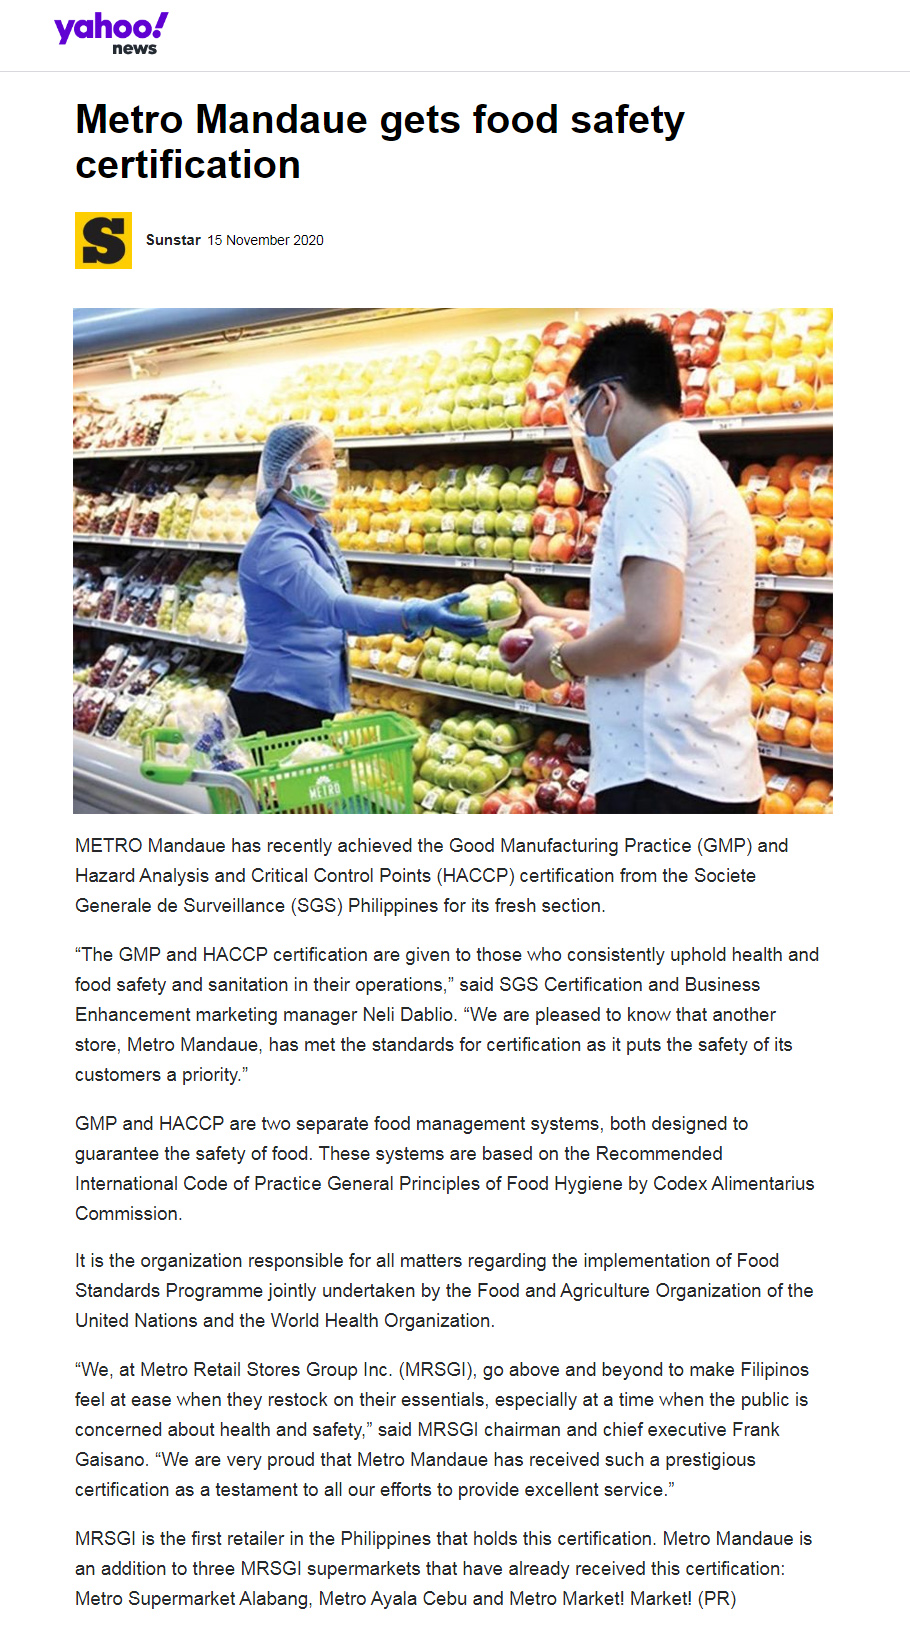 November 15 2020 Metro Mandaue gets food safety certification Yahoo News ph.news.yahoo.com